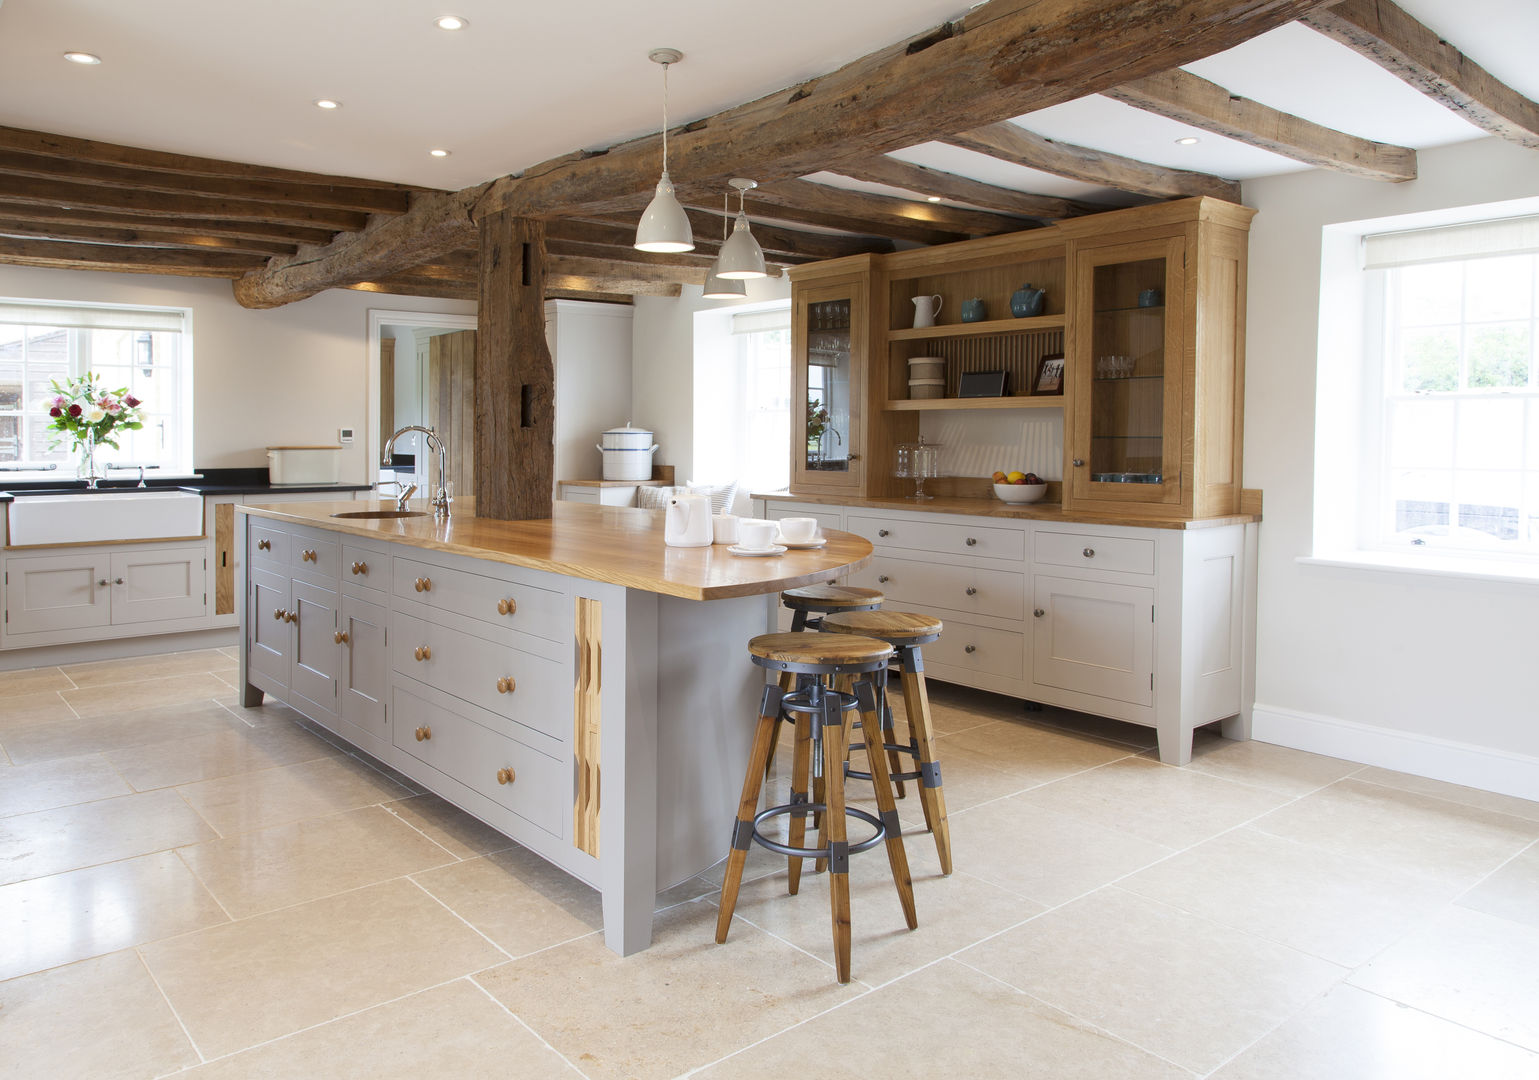 Old English - Bespoke kitchen project in Cambridgeshire Baker & Baker Кухня dresser,kitchen island,seating,tile flooring,beams,lighting